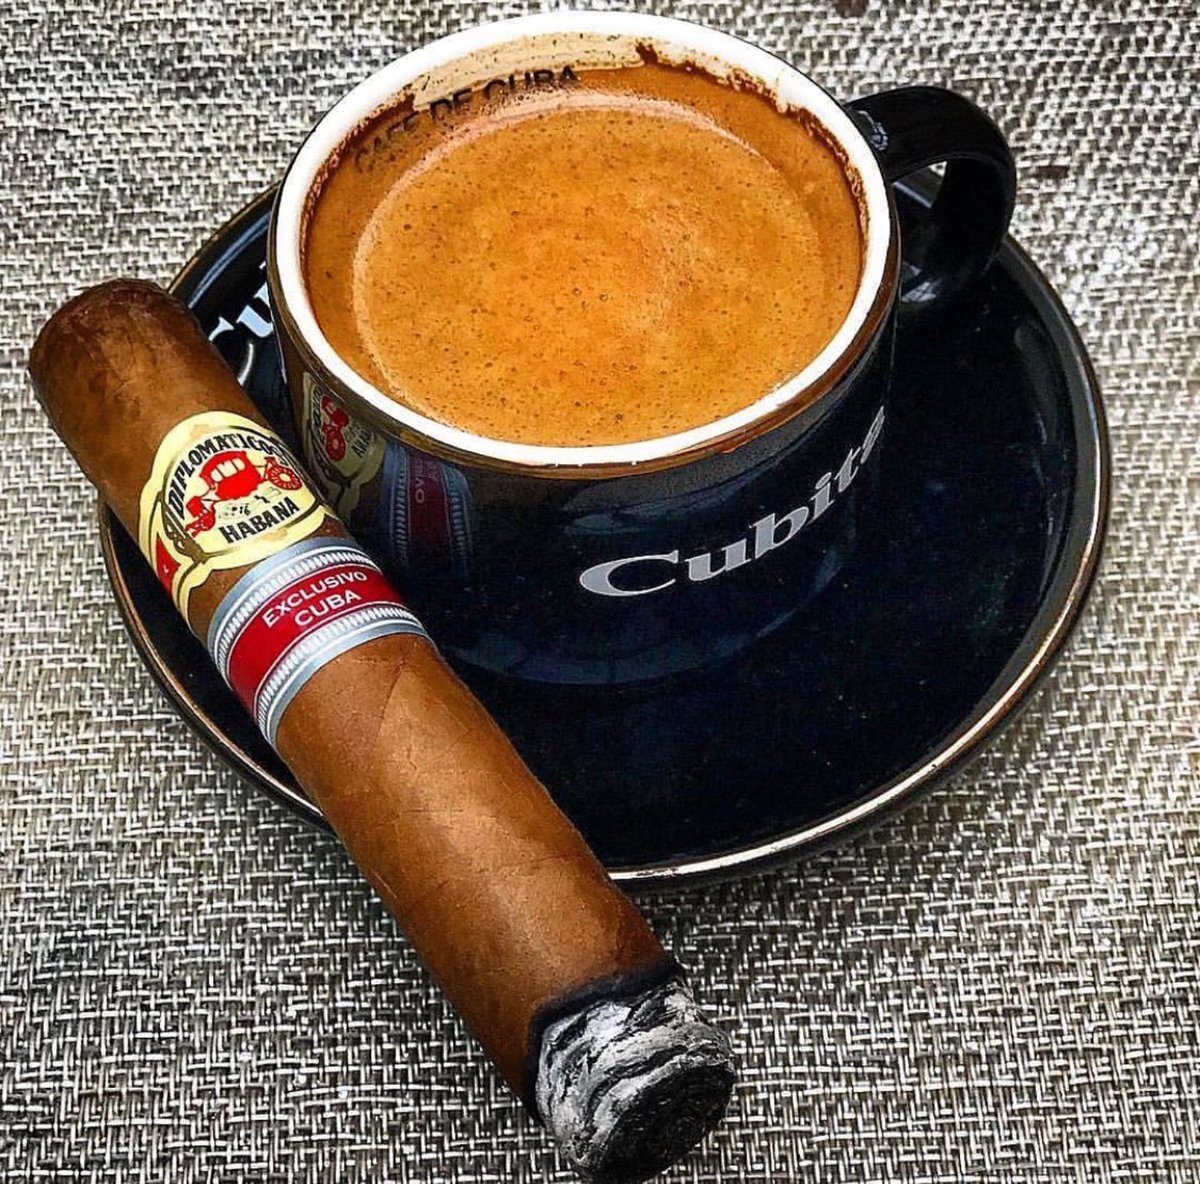 #NowSmoking #SaturdayMood #GoodMorningTwitterWorld #espresso #Coffeetime #weekendsunshine #BeCalm #PeaceAndLove #ThankYou #KindnessMatters #cigar #cubans #Habana #CIGARS #IFBAP